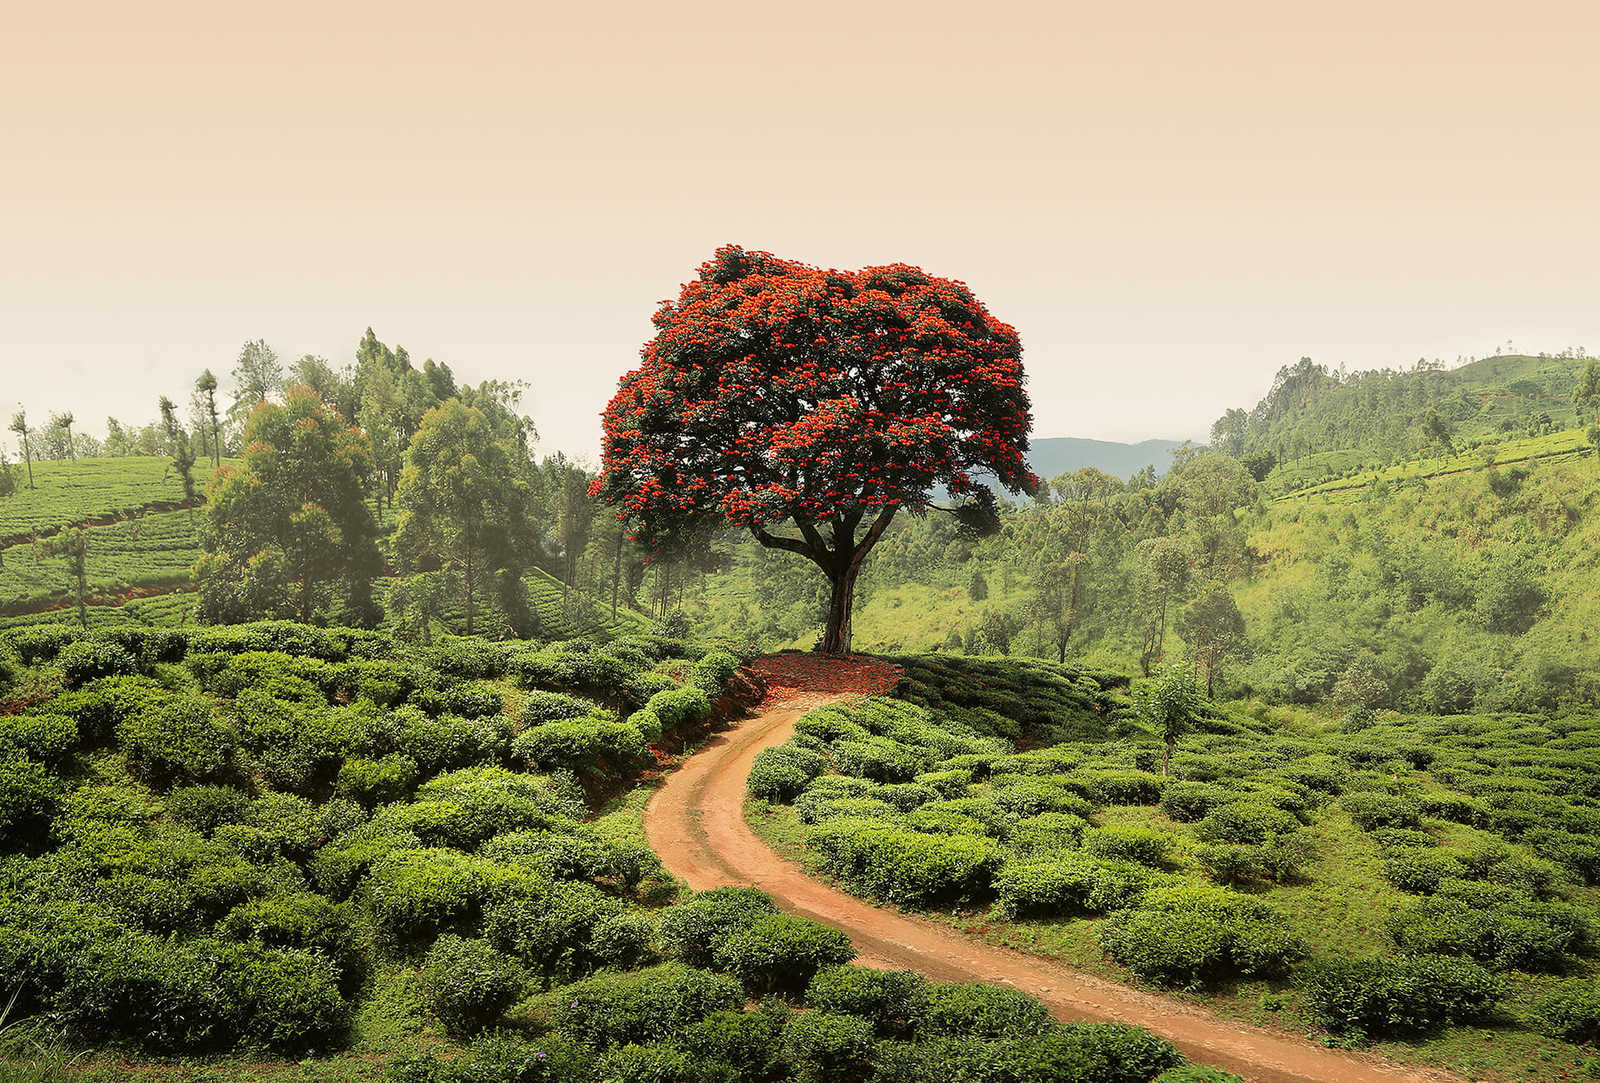         Photo wallpaper landscape in Sri Lanka - green, red, brown
    